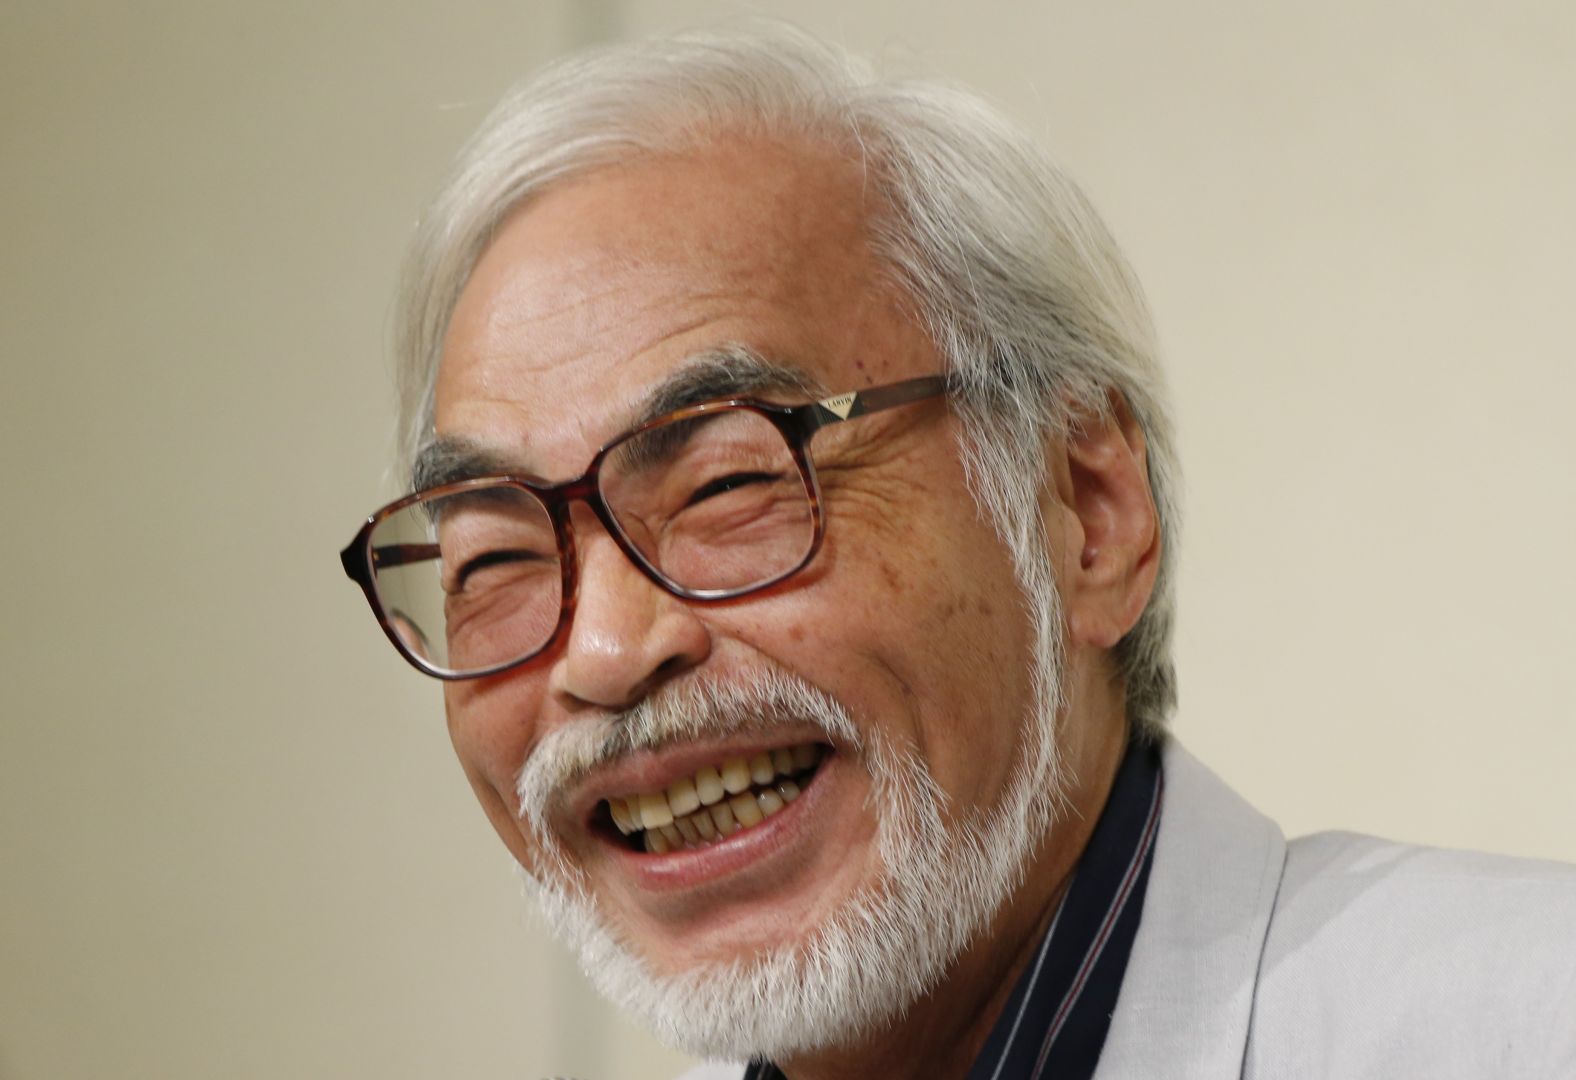 688253 descargar imagen celebridades, hayao miyazaki: fondos de pantalla y protectores de pantalla gratis